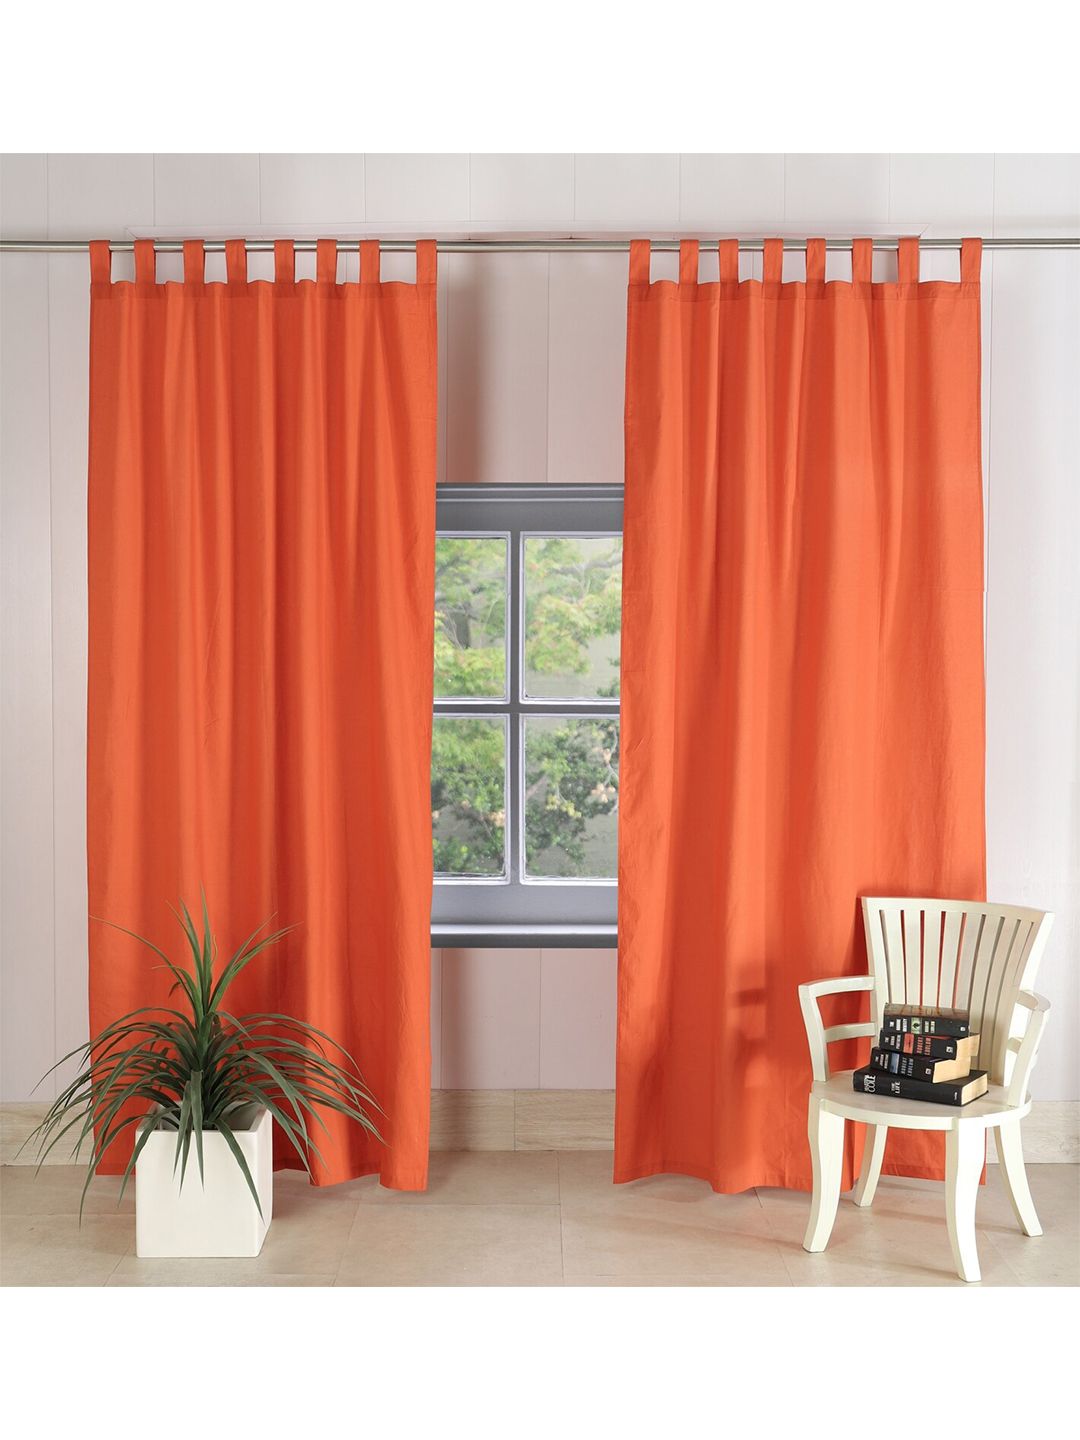 HANDICRAFT PALACE Orange Set of 2 Black Out Door Curtain Price in India